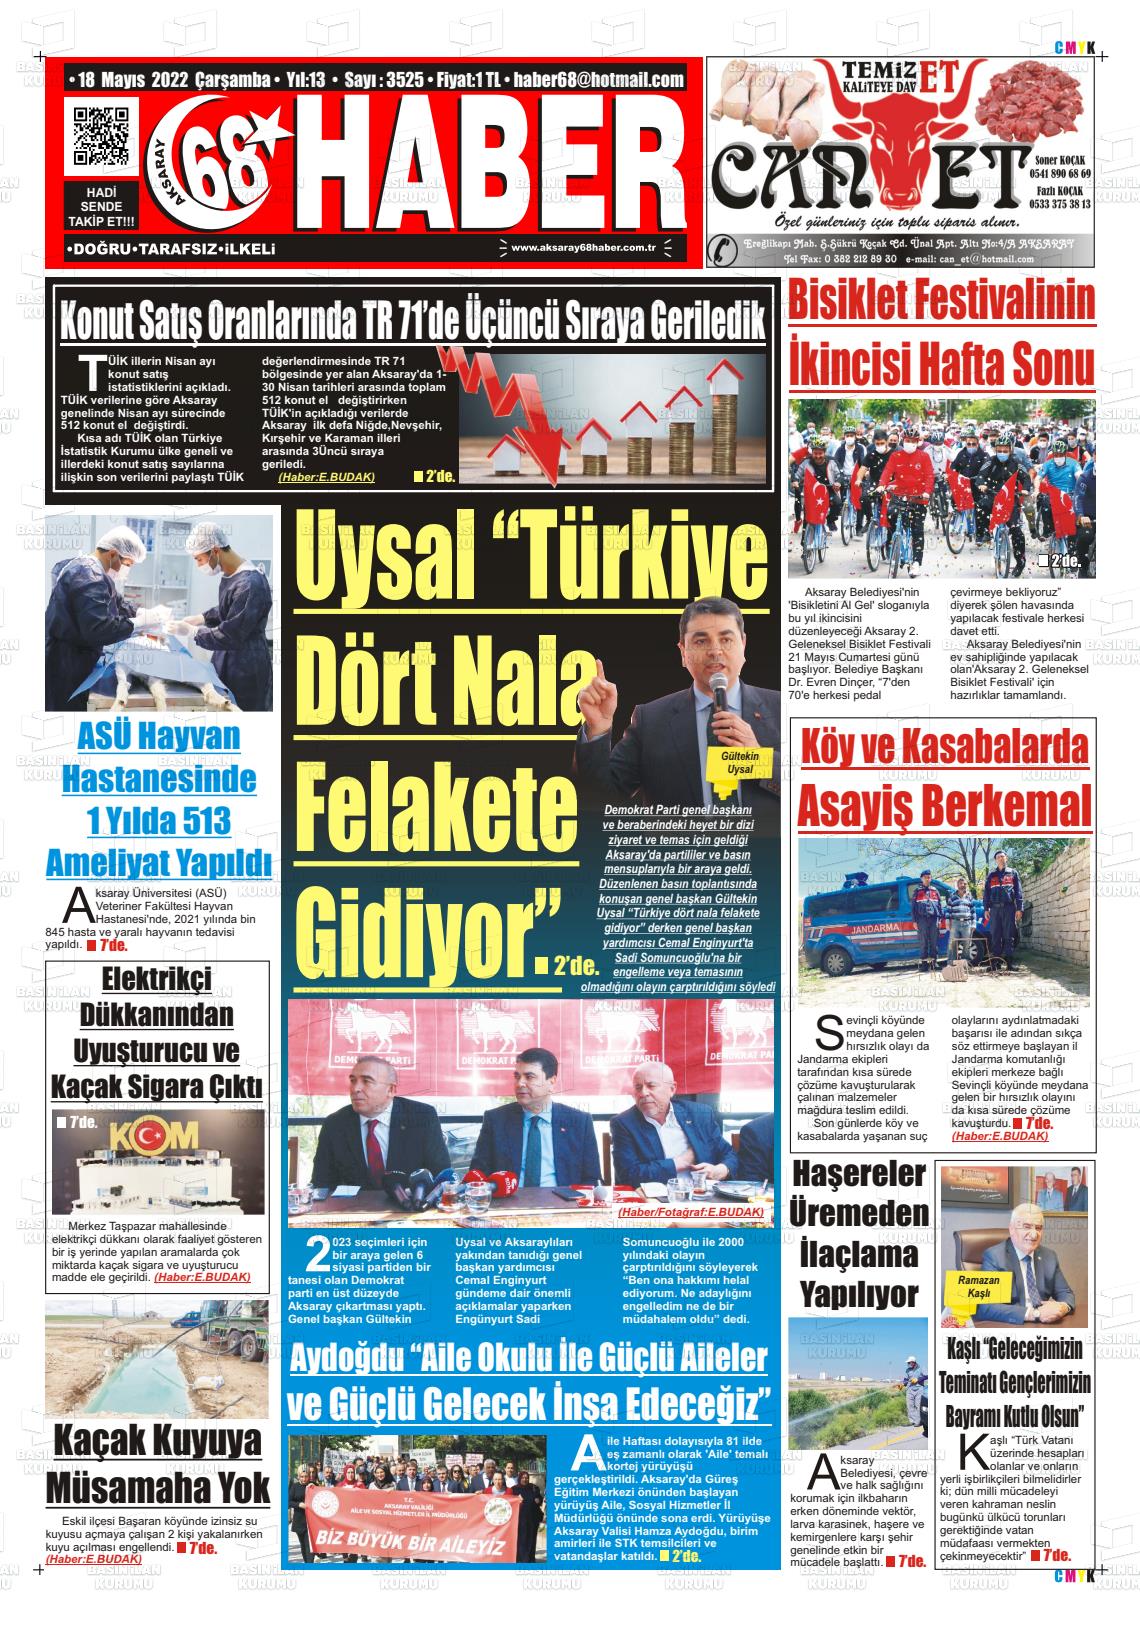 18 Mayıs 2022 Aksaray 68 Haber Gazete Manşeti